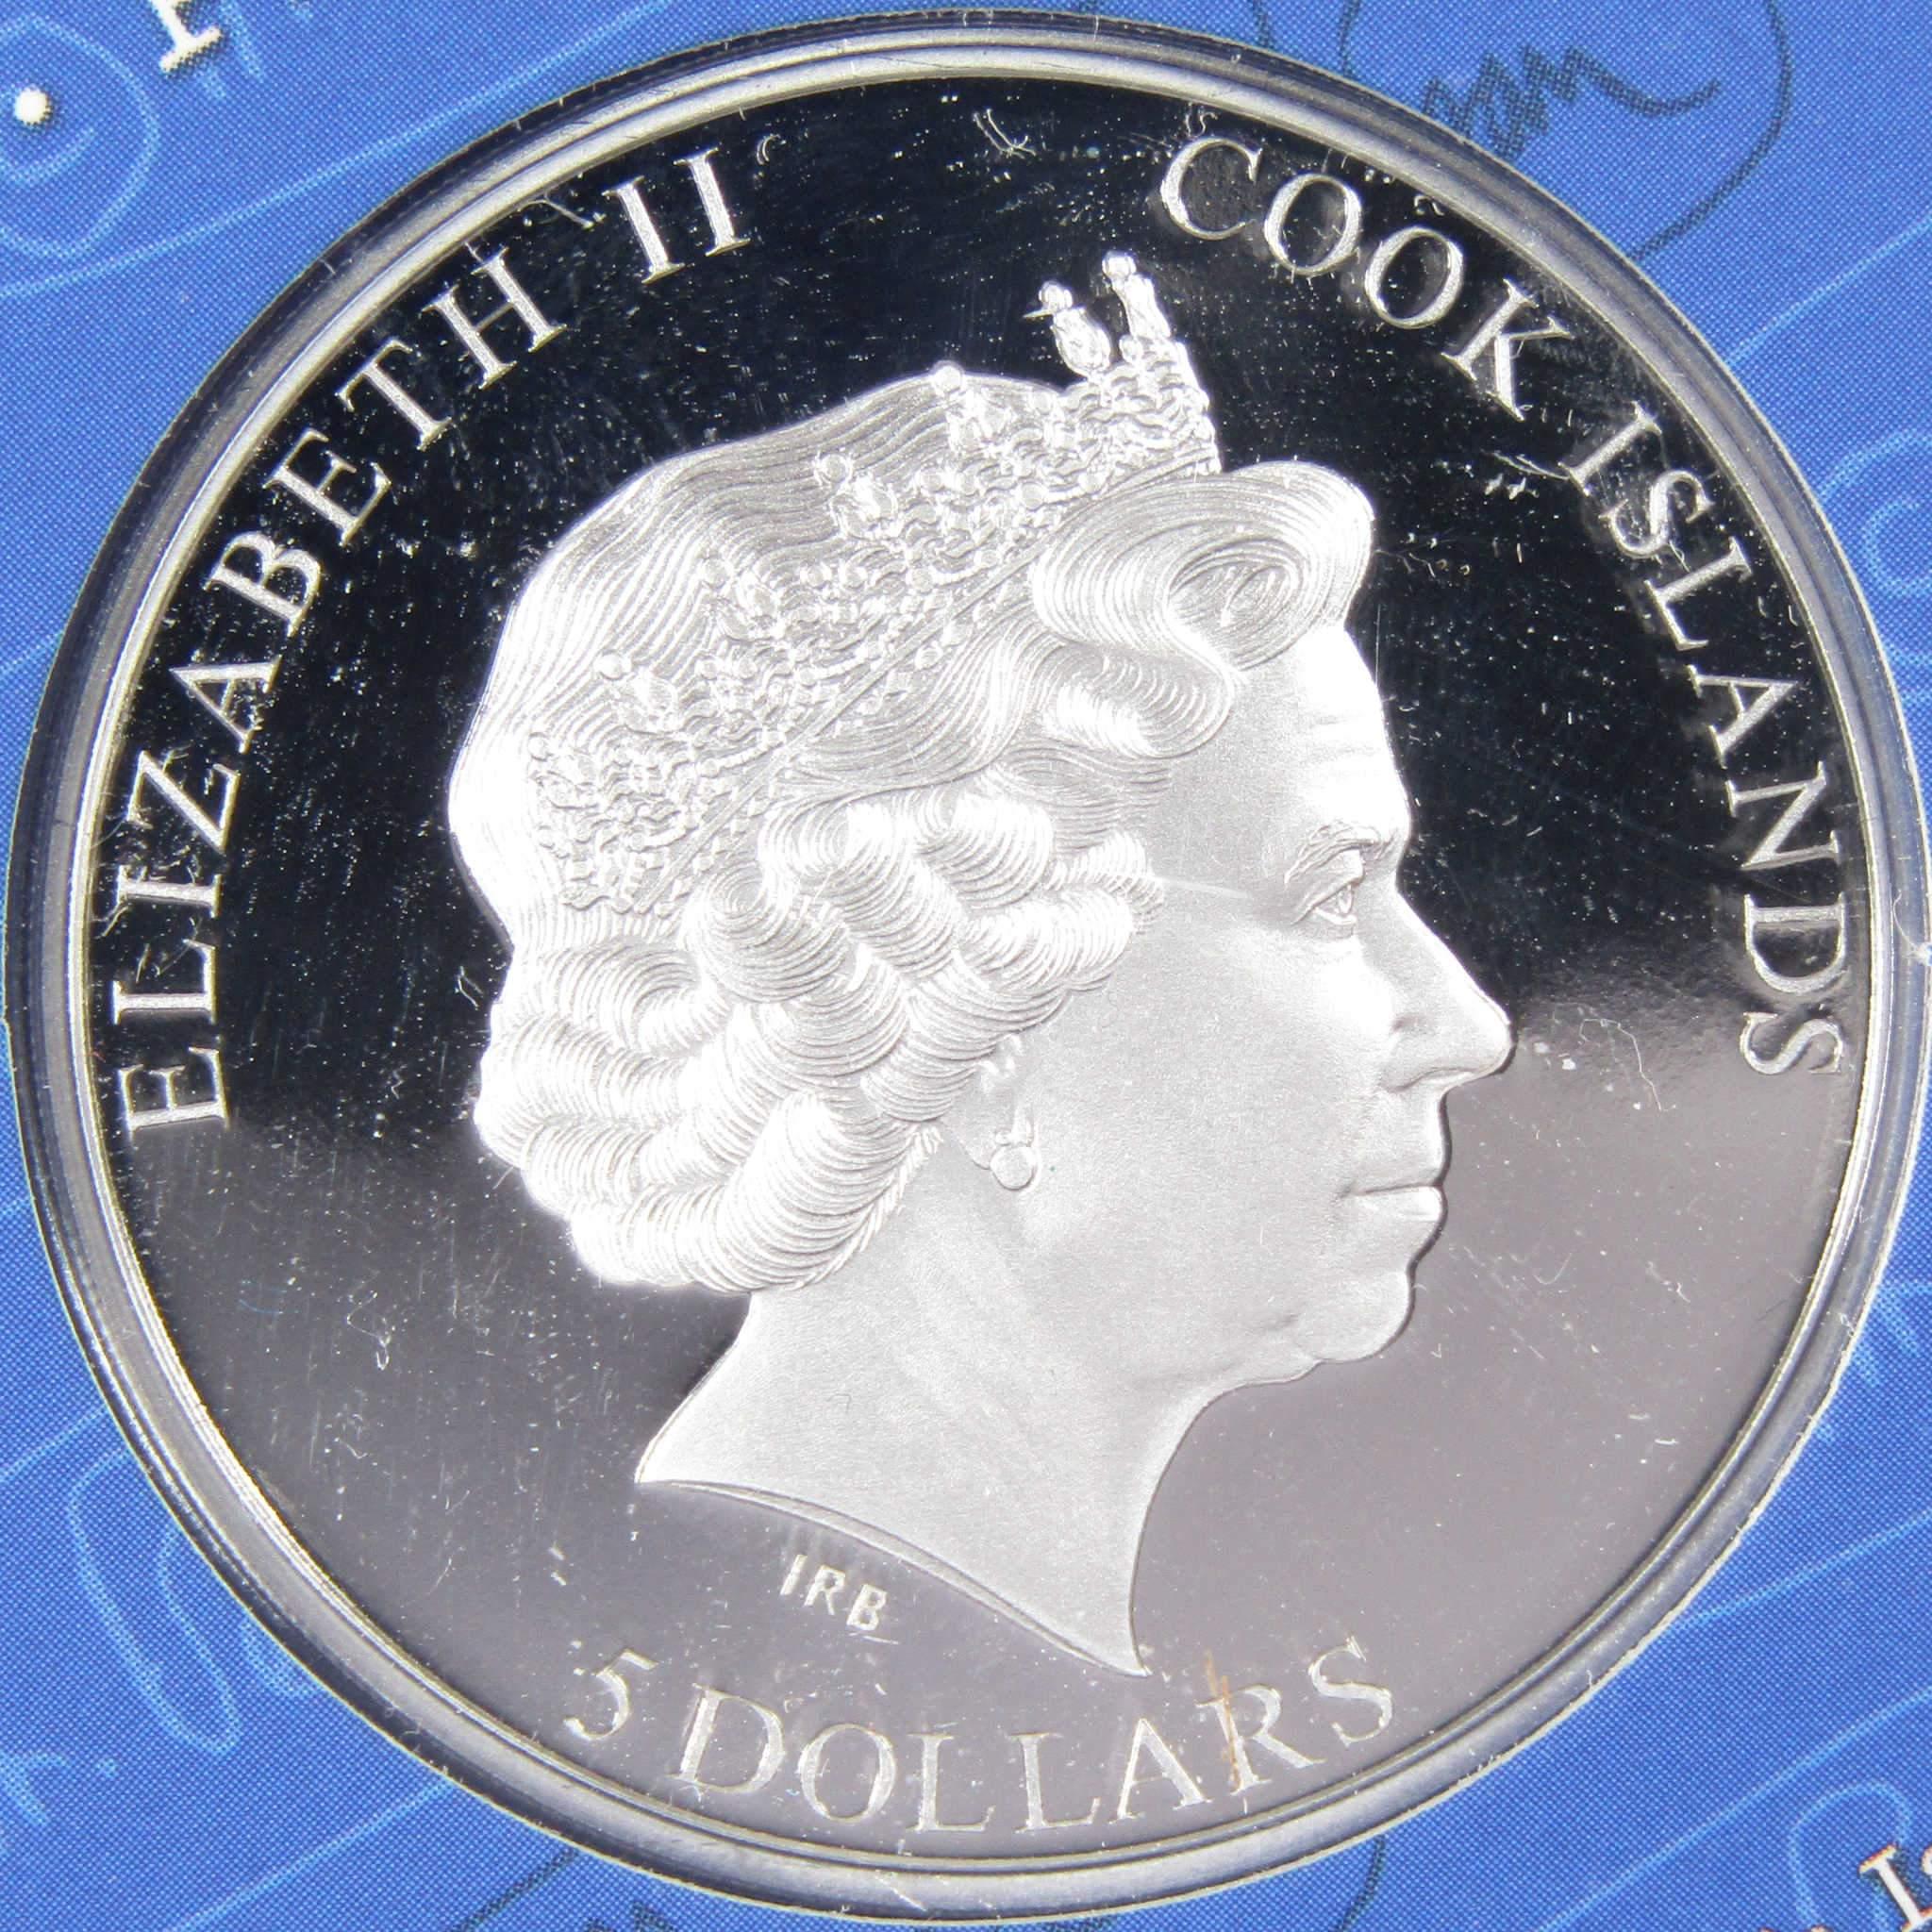 Mr Bean 30th Anniversary 1 oz .999 Fine Silver $5 Proof Coin 2020 Cook Islands